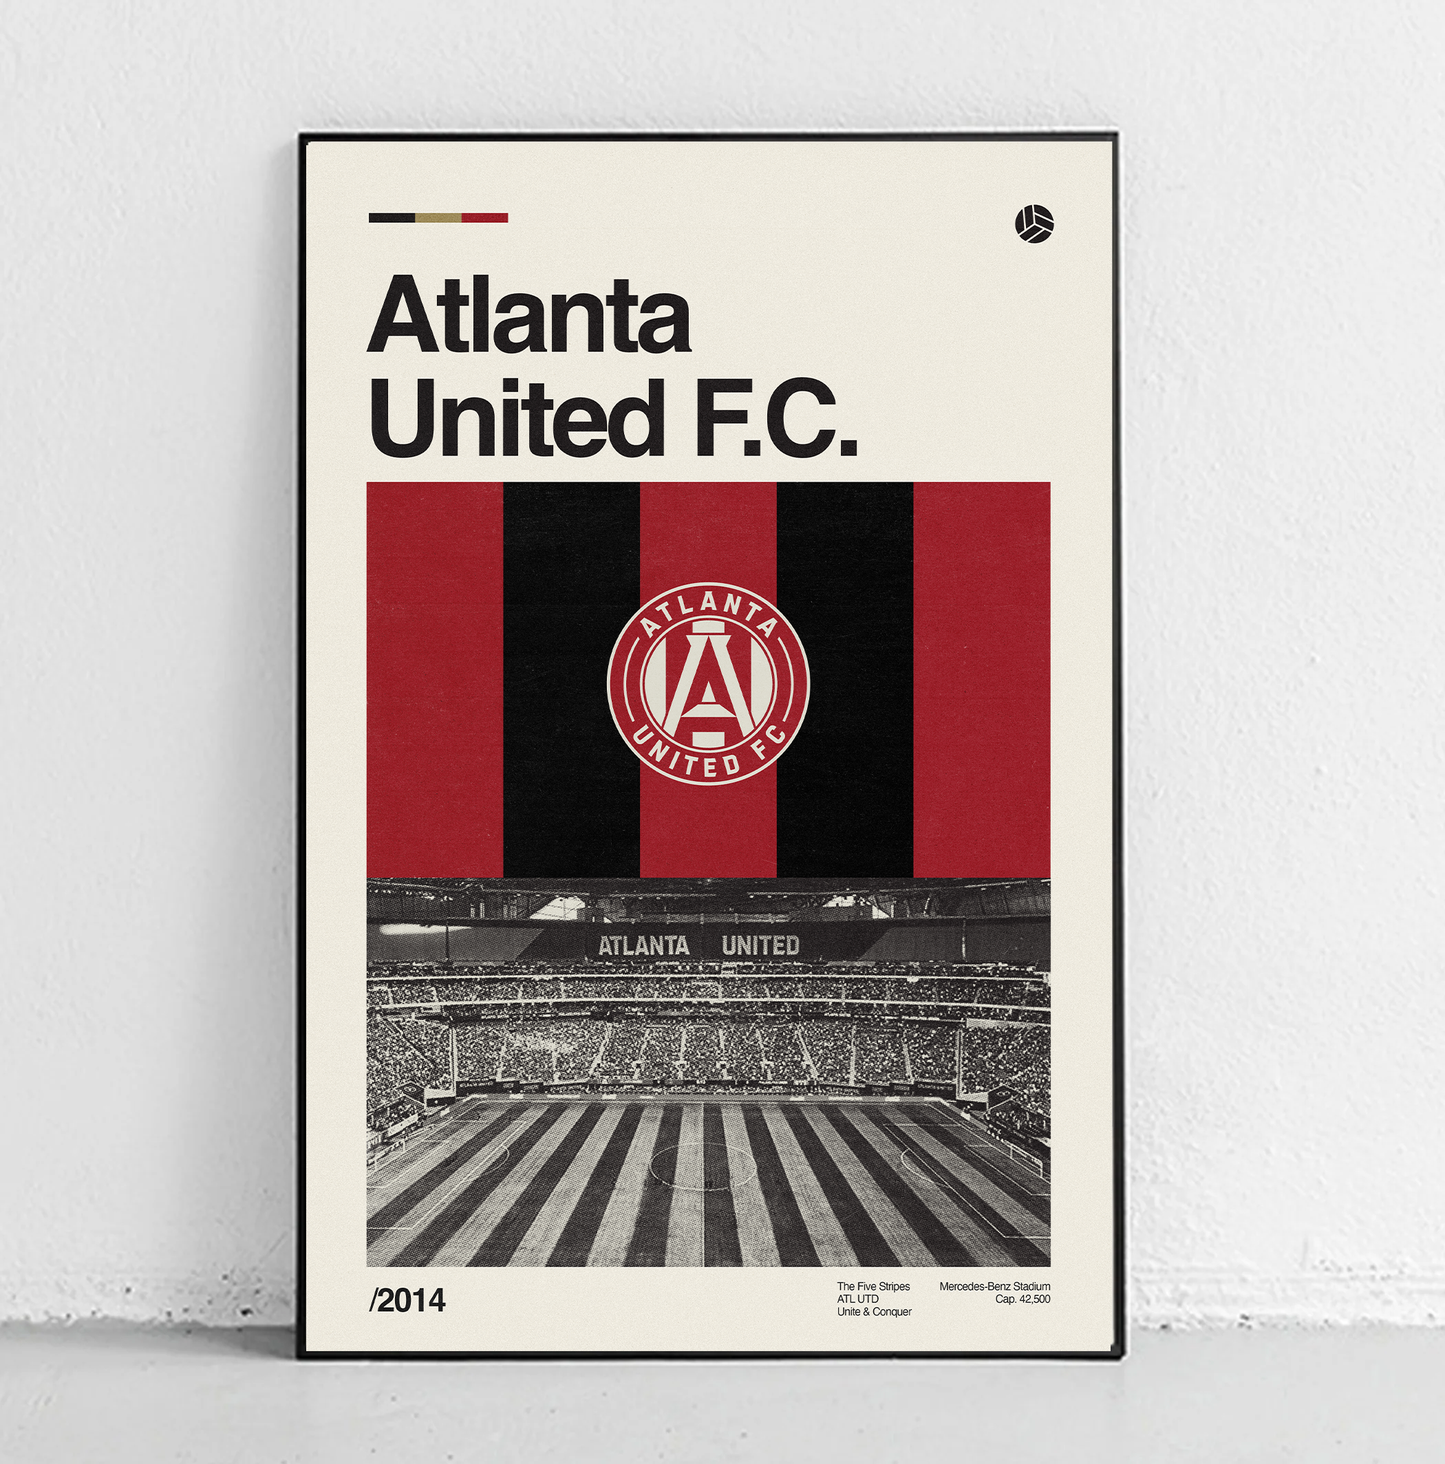 Atlanta United F.C.